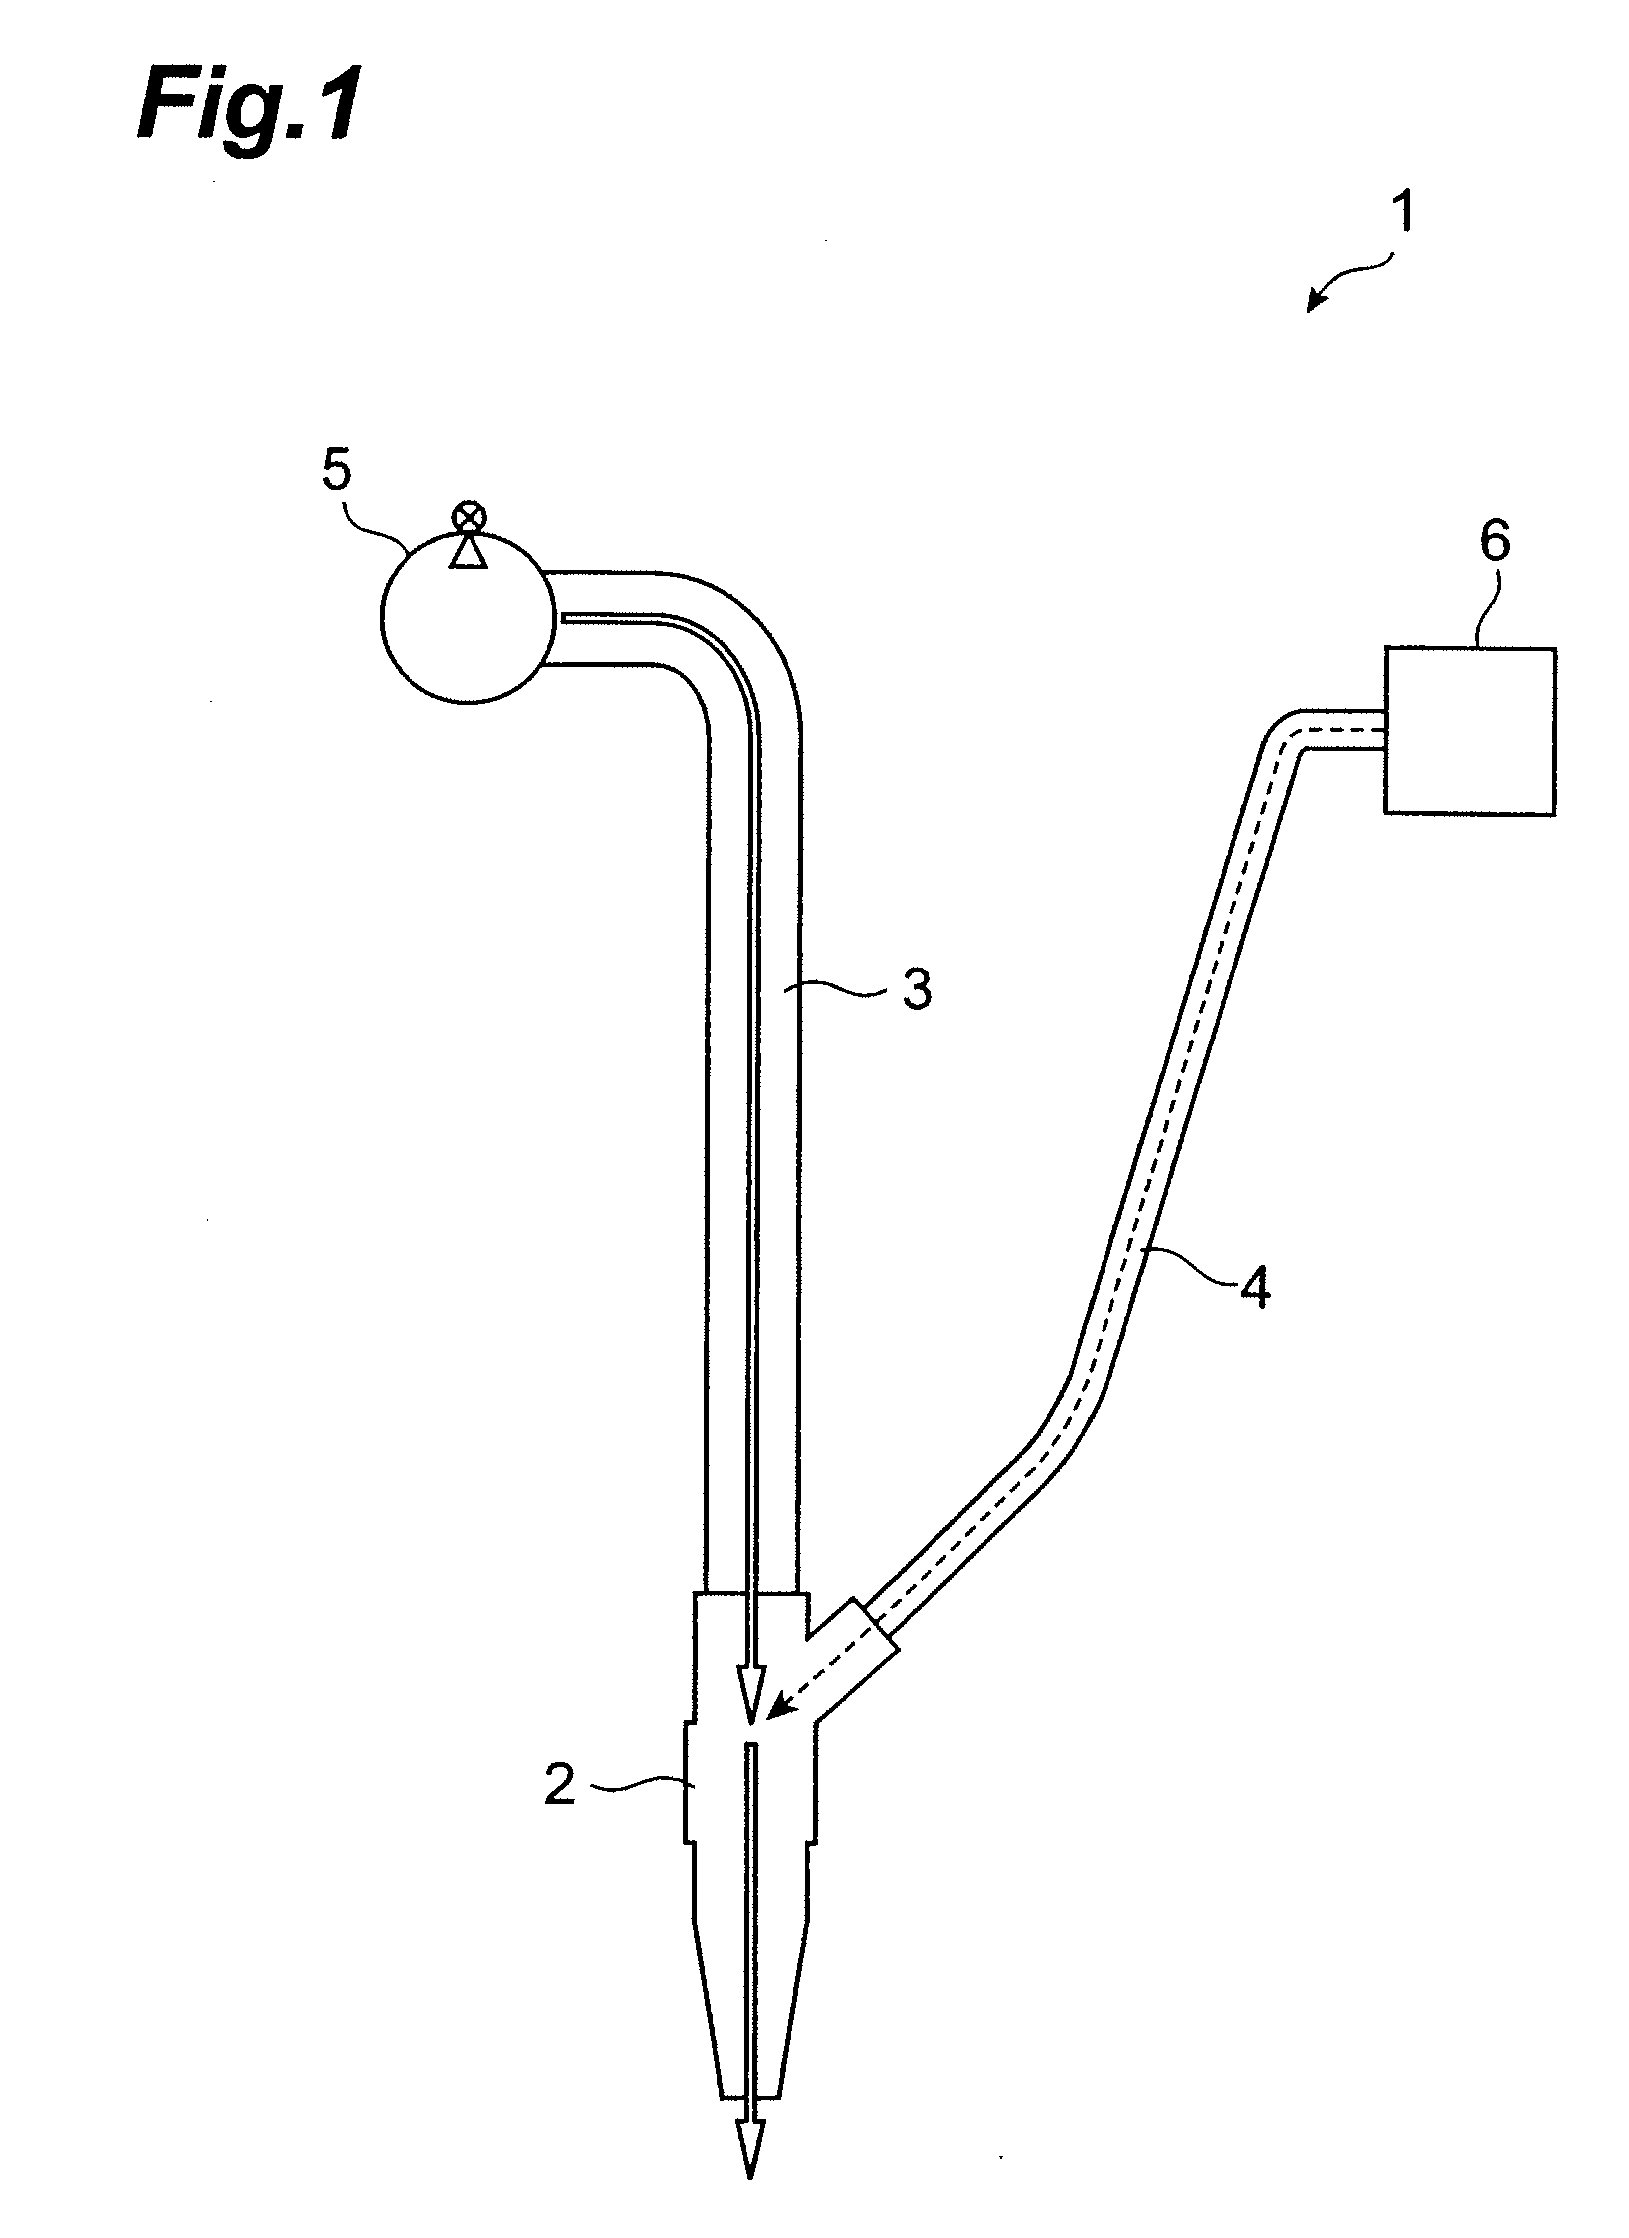 Method of spray application, and spray apparatus, for bentonite material